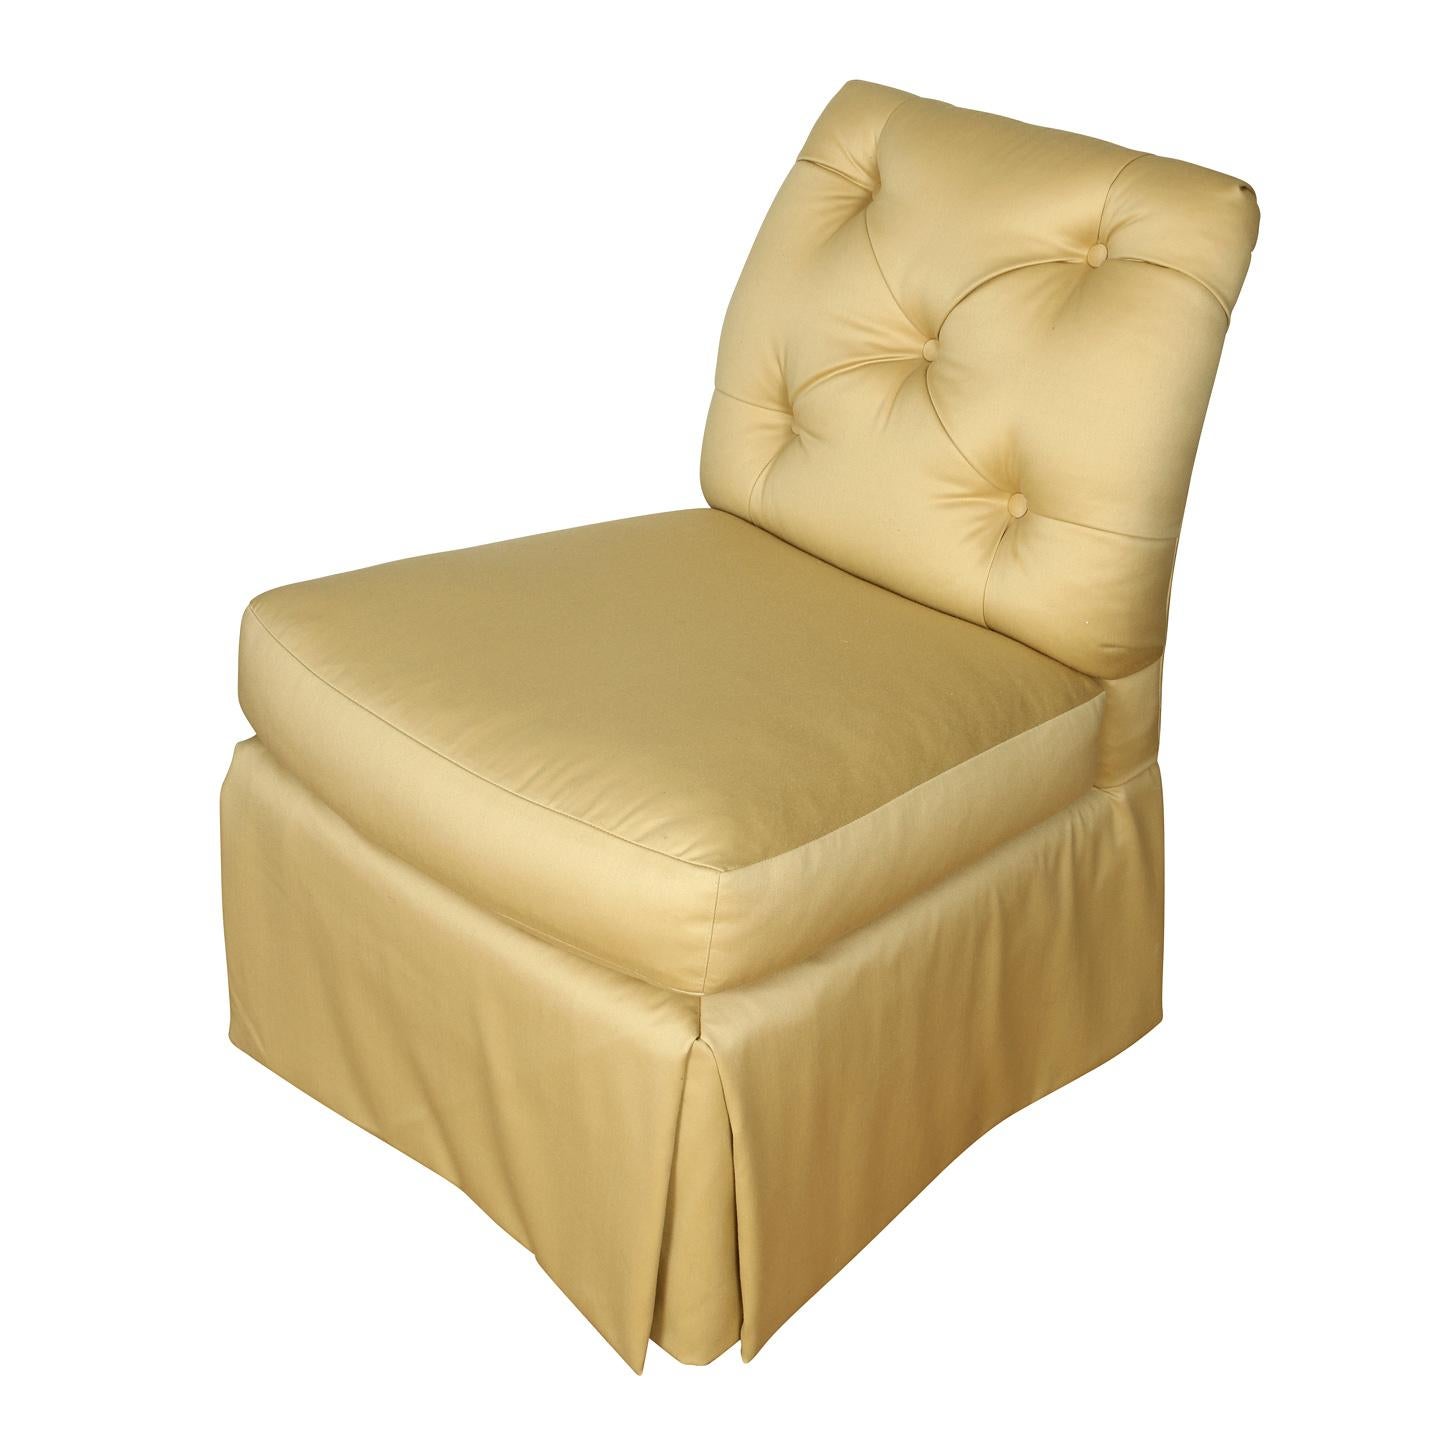 Baker cream upholstered slipper chair with tufted back and tailored, skirted bottom.